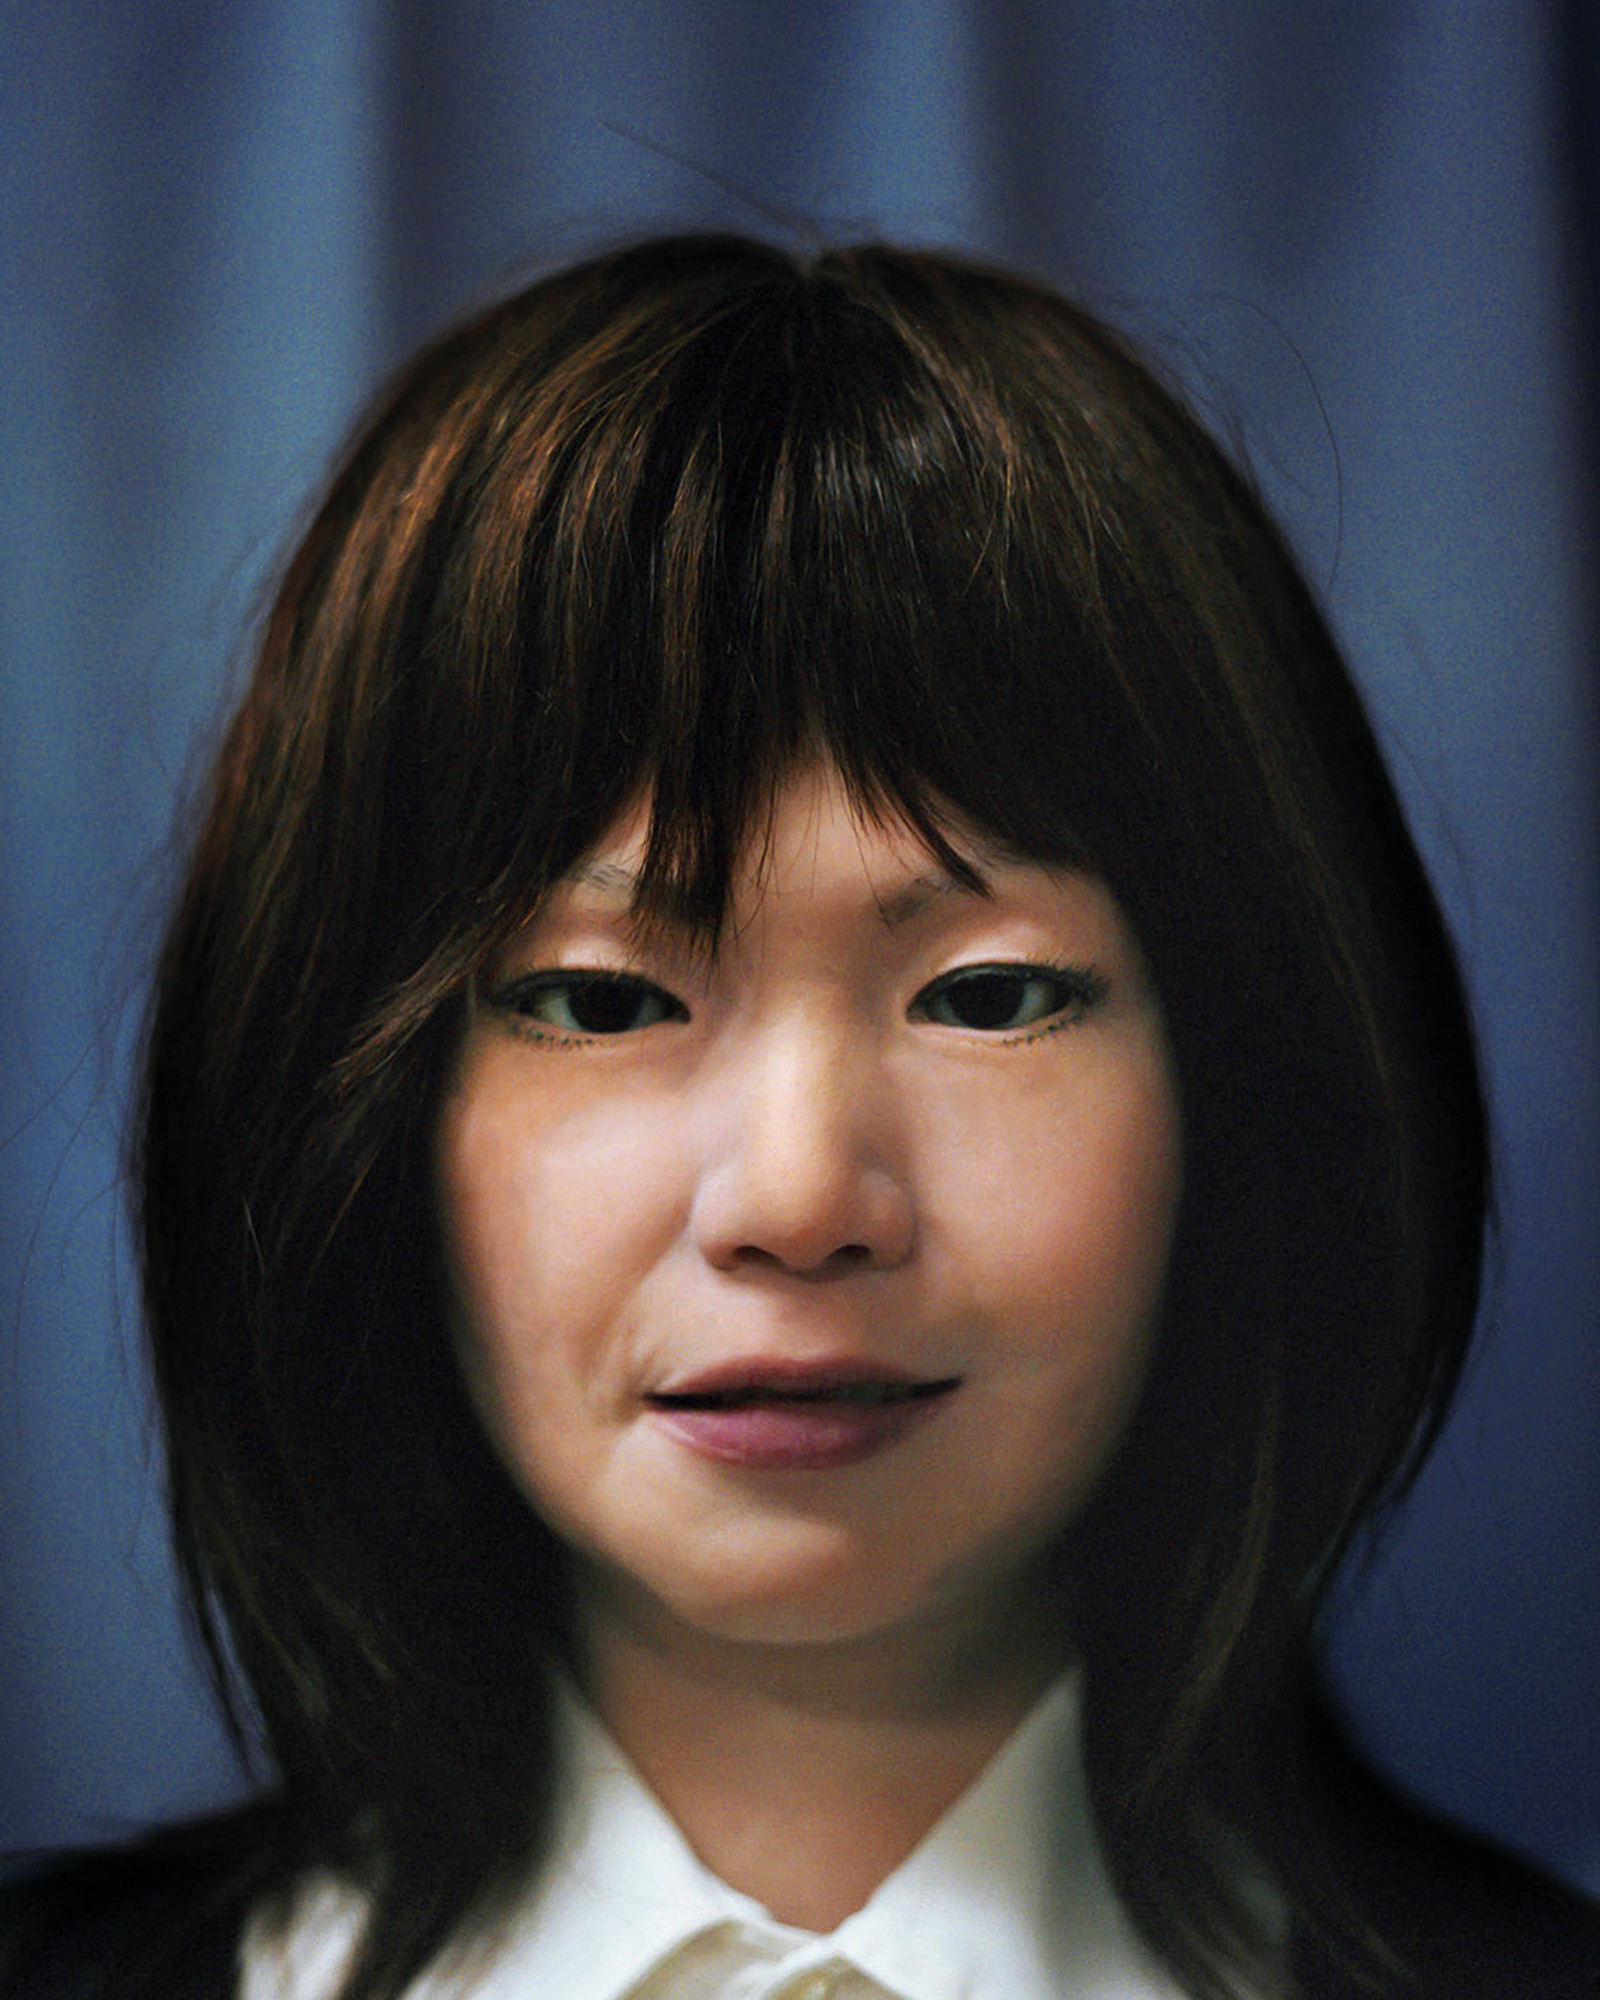   Portrait of Actroid-F,  2013  Hiroshi Ishiguro Laboratories, ATR 